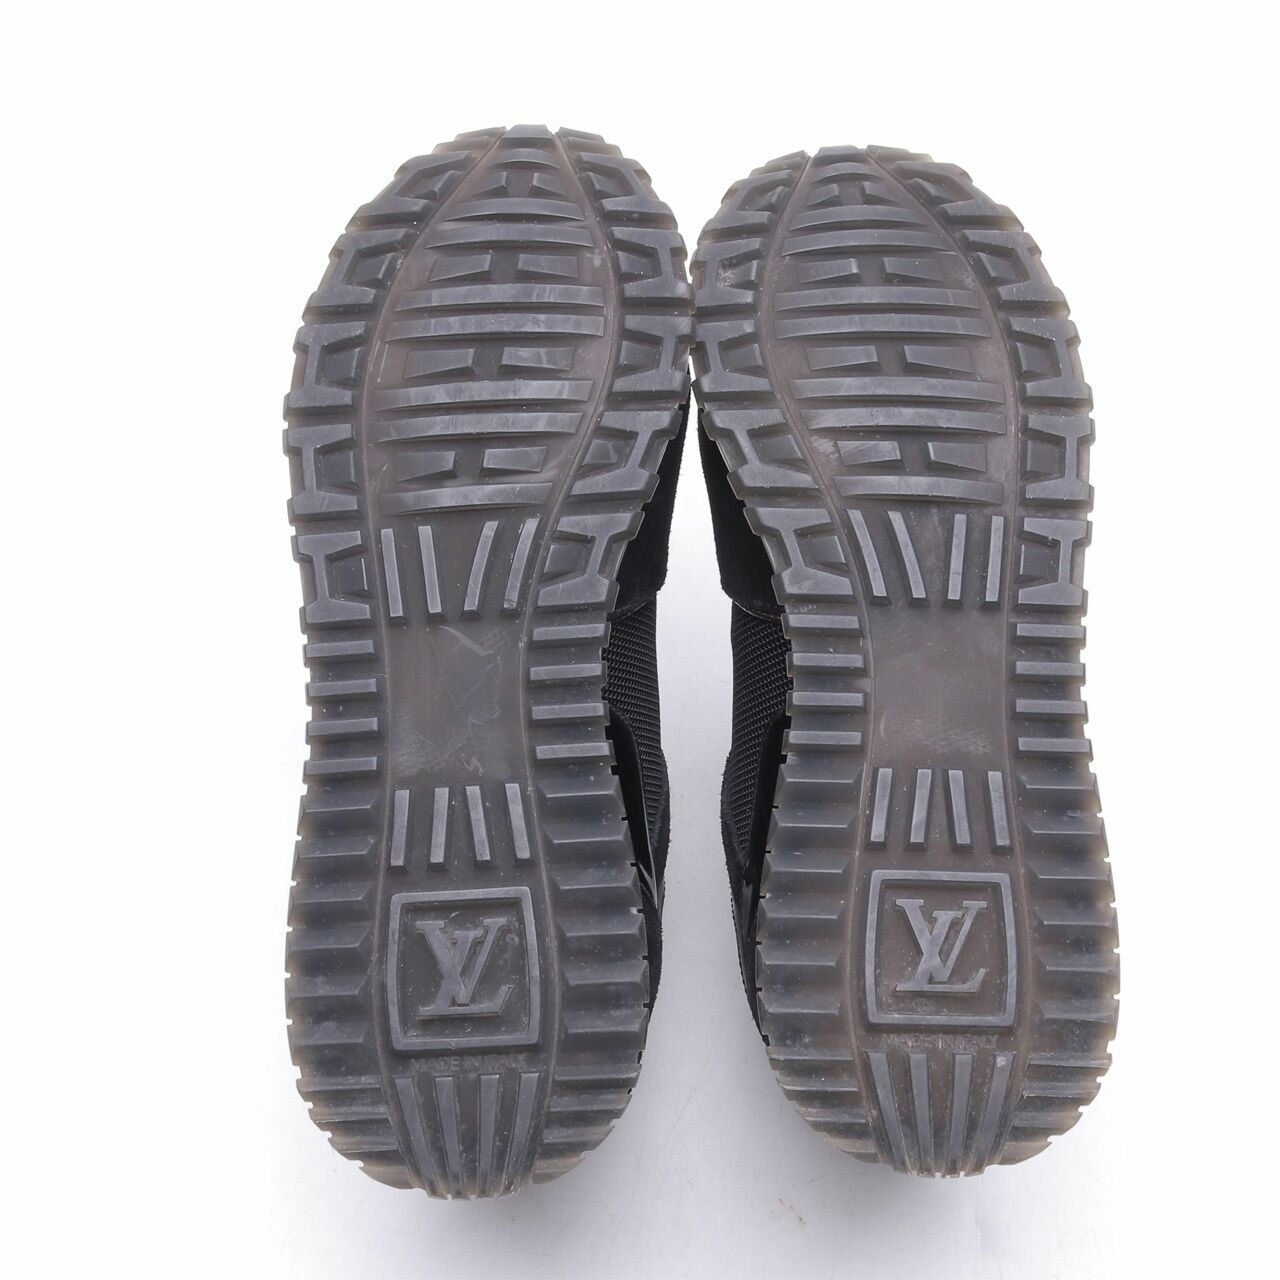 Louis Vuitton Monogram Runaway Black/Brown Sneakers